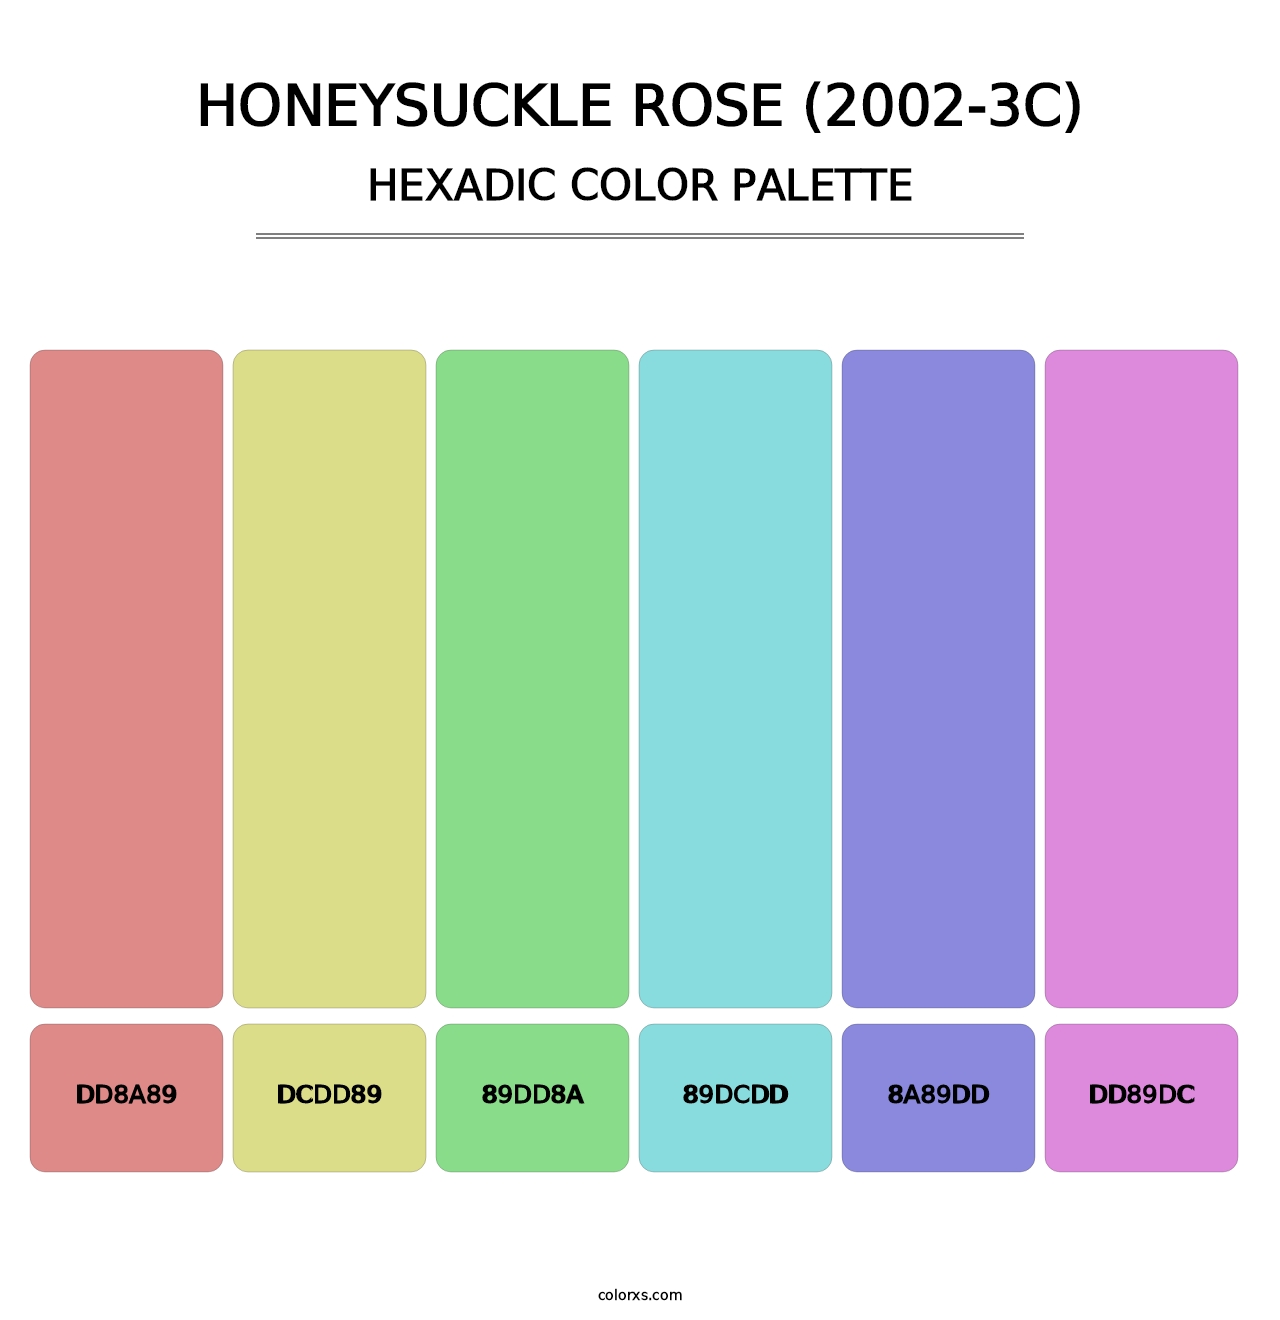 Honeysuckle Rose (2002-3C) - Hexadic Color Palette